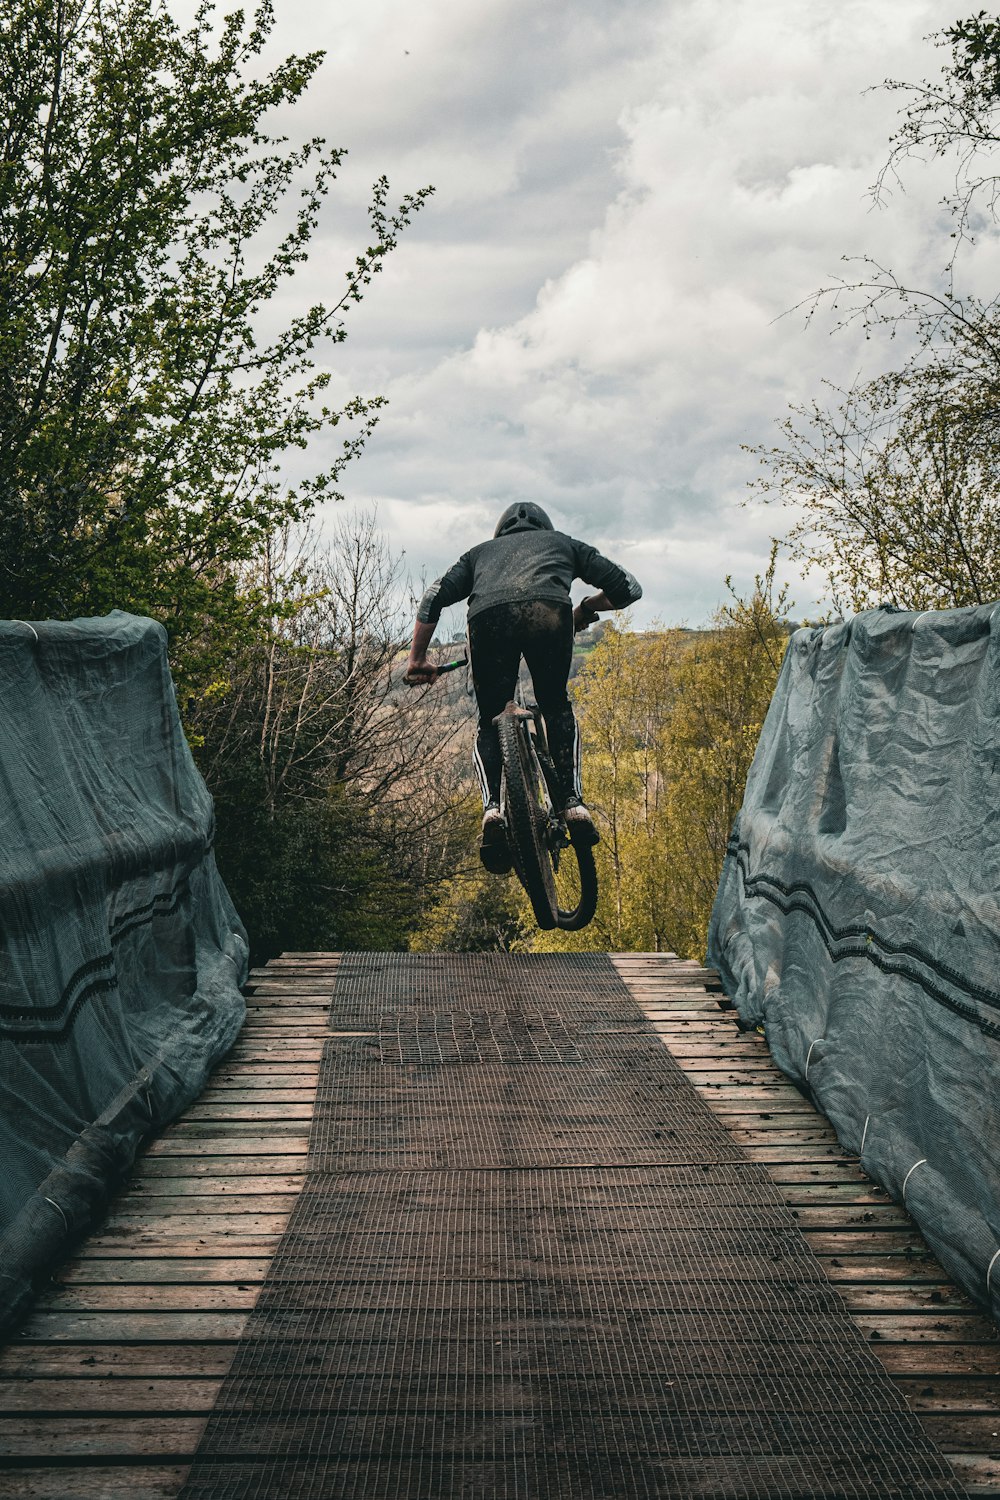 a person jumping a bike over a bridge